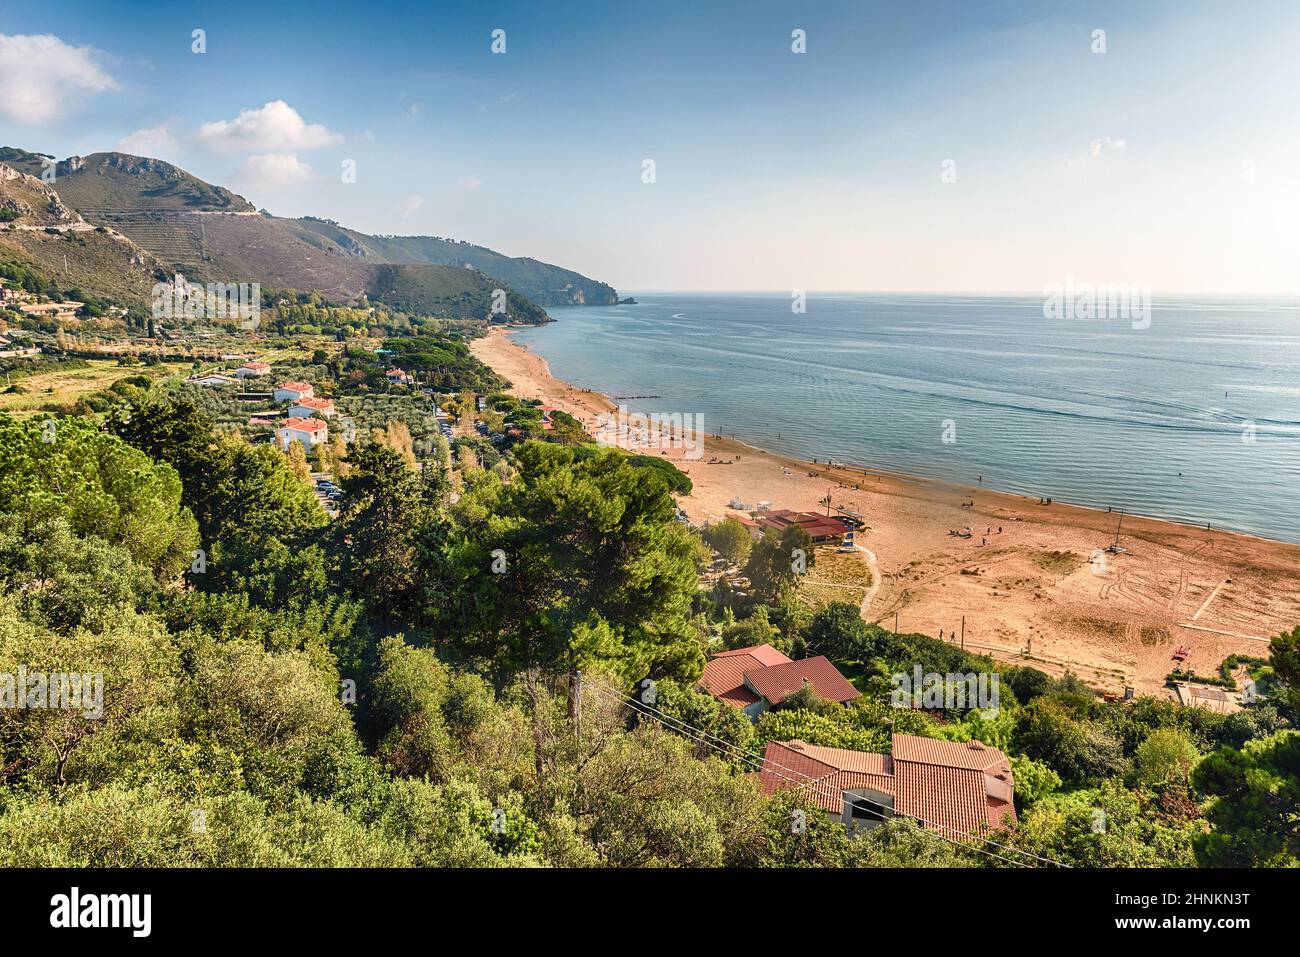 Scenic view over the beach of Sperlonga, Italy Stock Photo